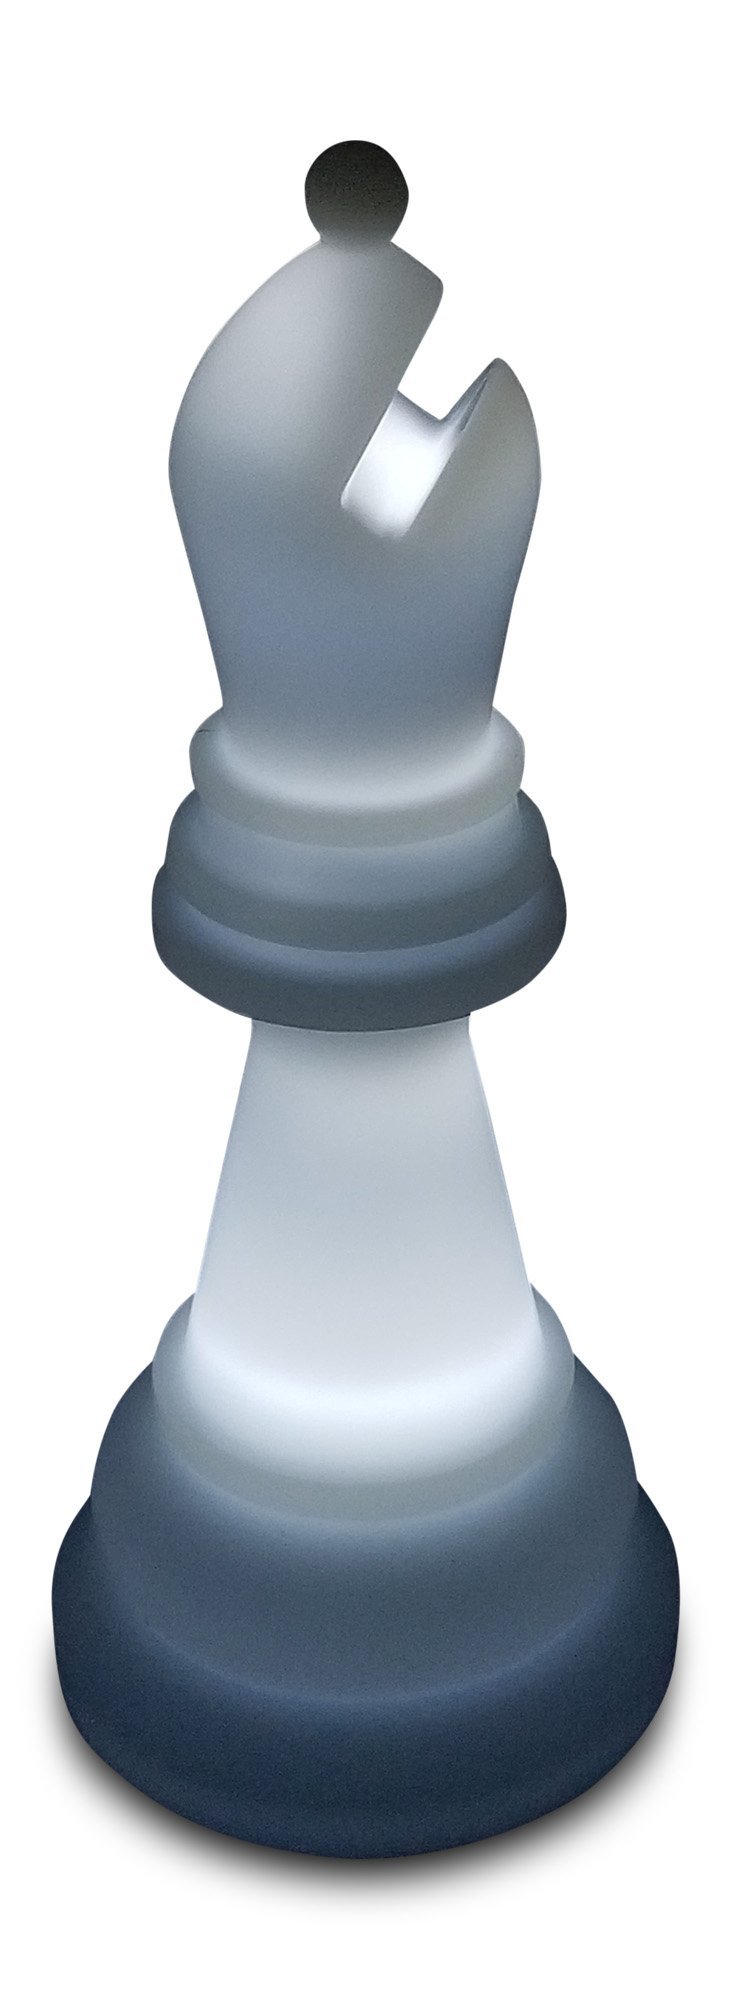 MegaChess 34 Inch Perfect Bishop Light-Up Giant Chess Piece - White |  | MegaChess.com